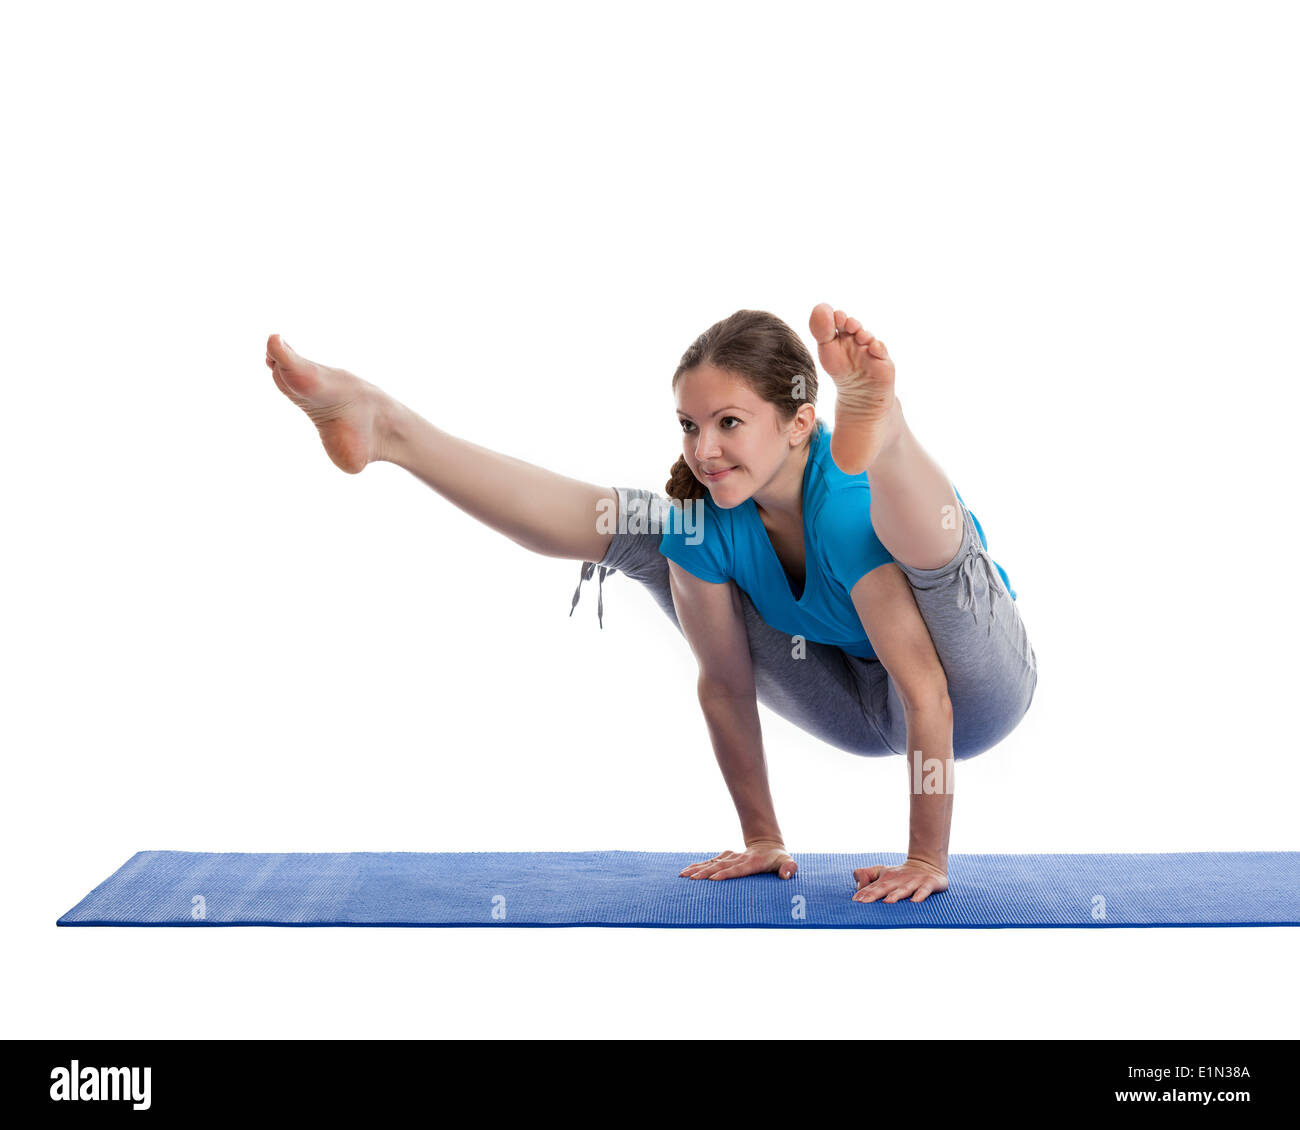 Yoga for Flexibility: 8 Yoga Poses That Make You Bendy Fast!